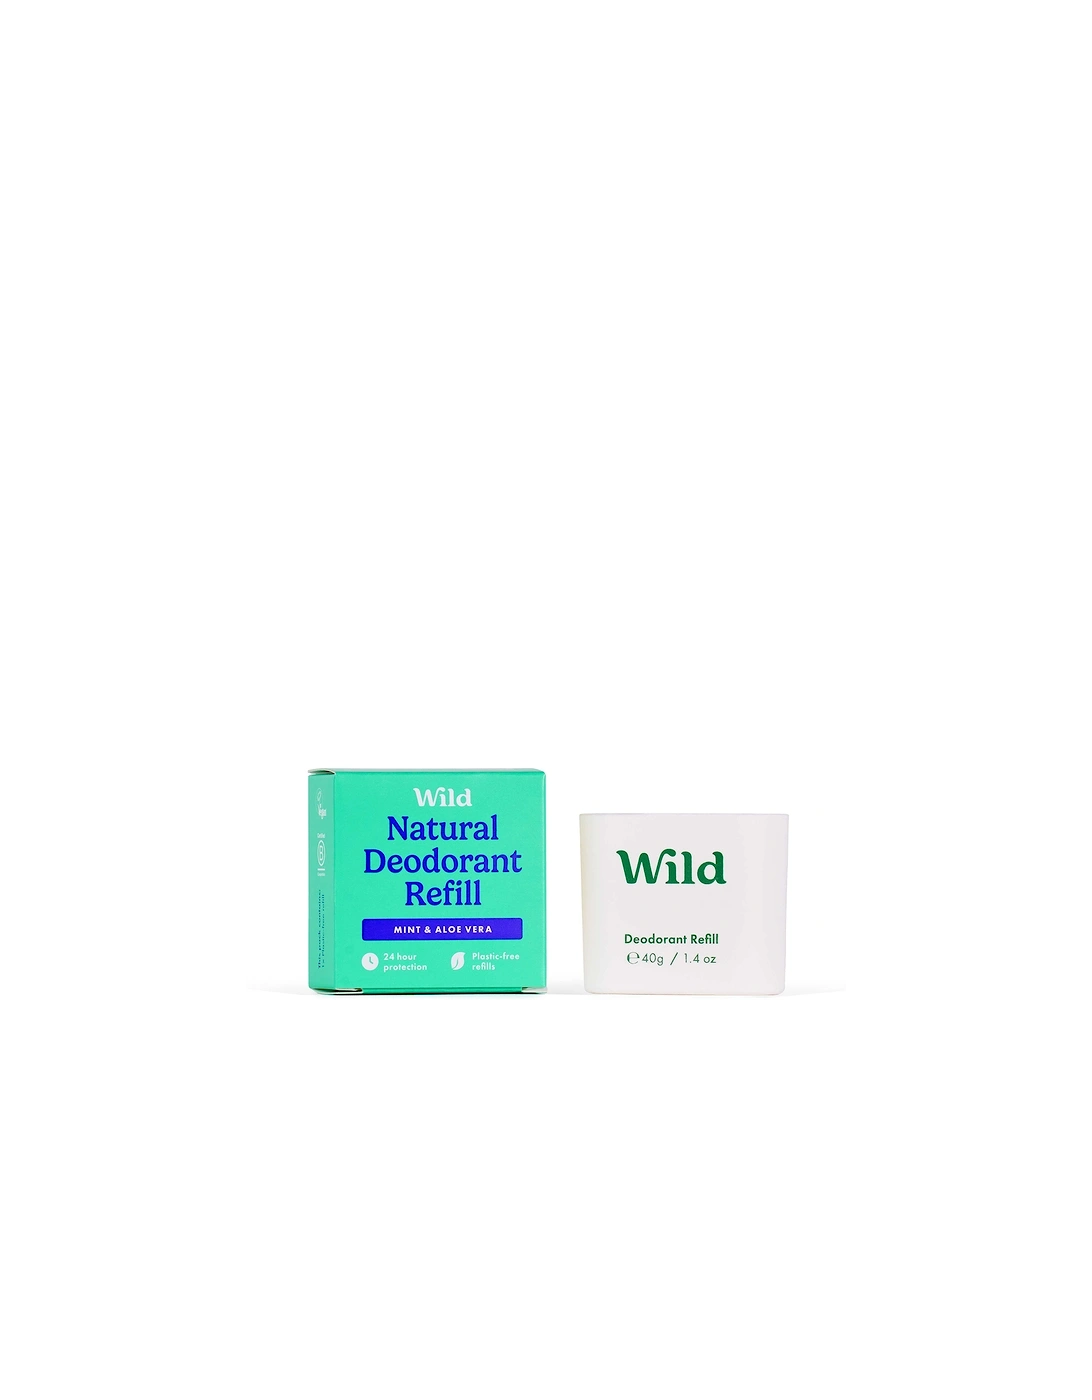 Men's Mint and Aloe Vera Deodorant Refill 40g, 2 of 1